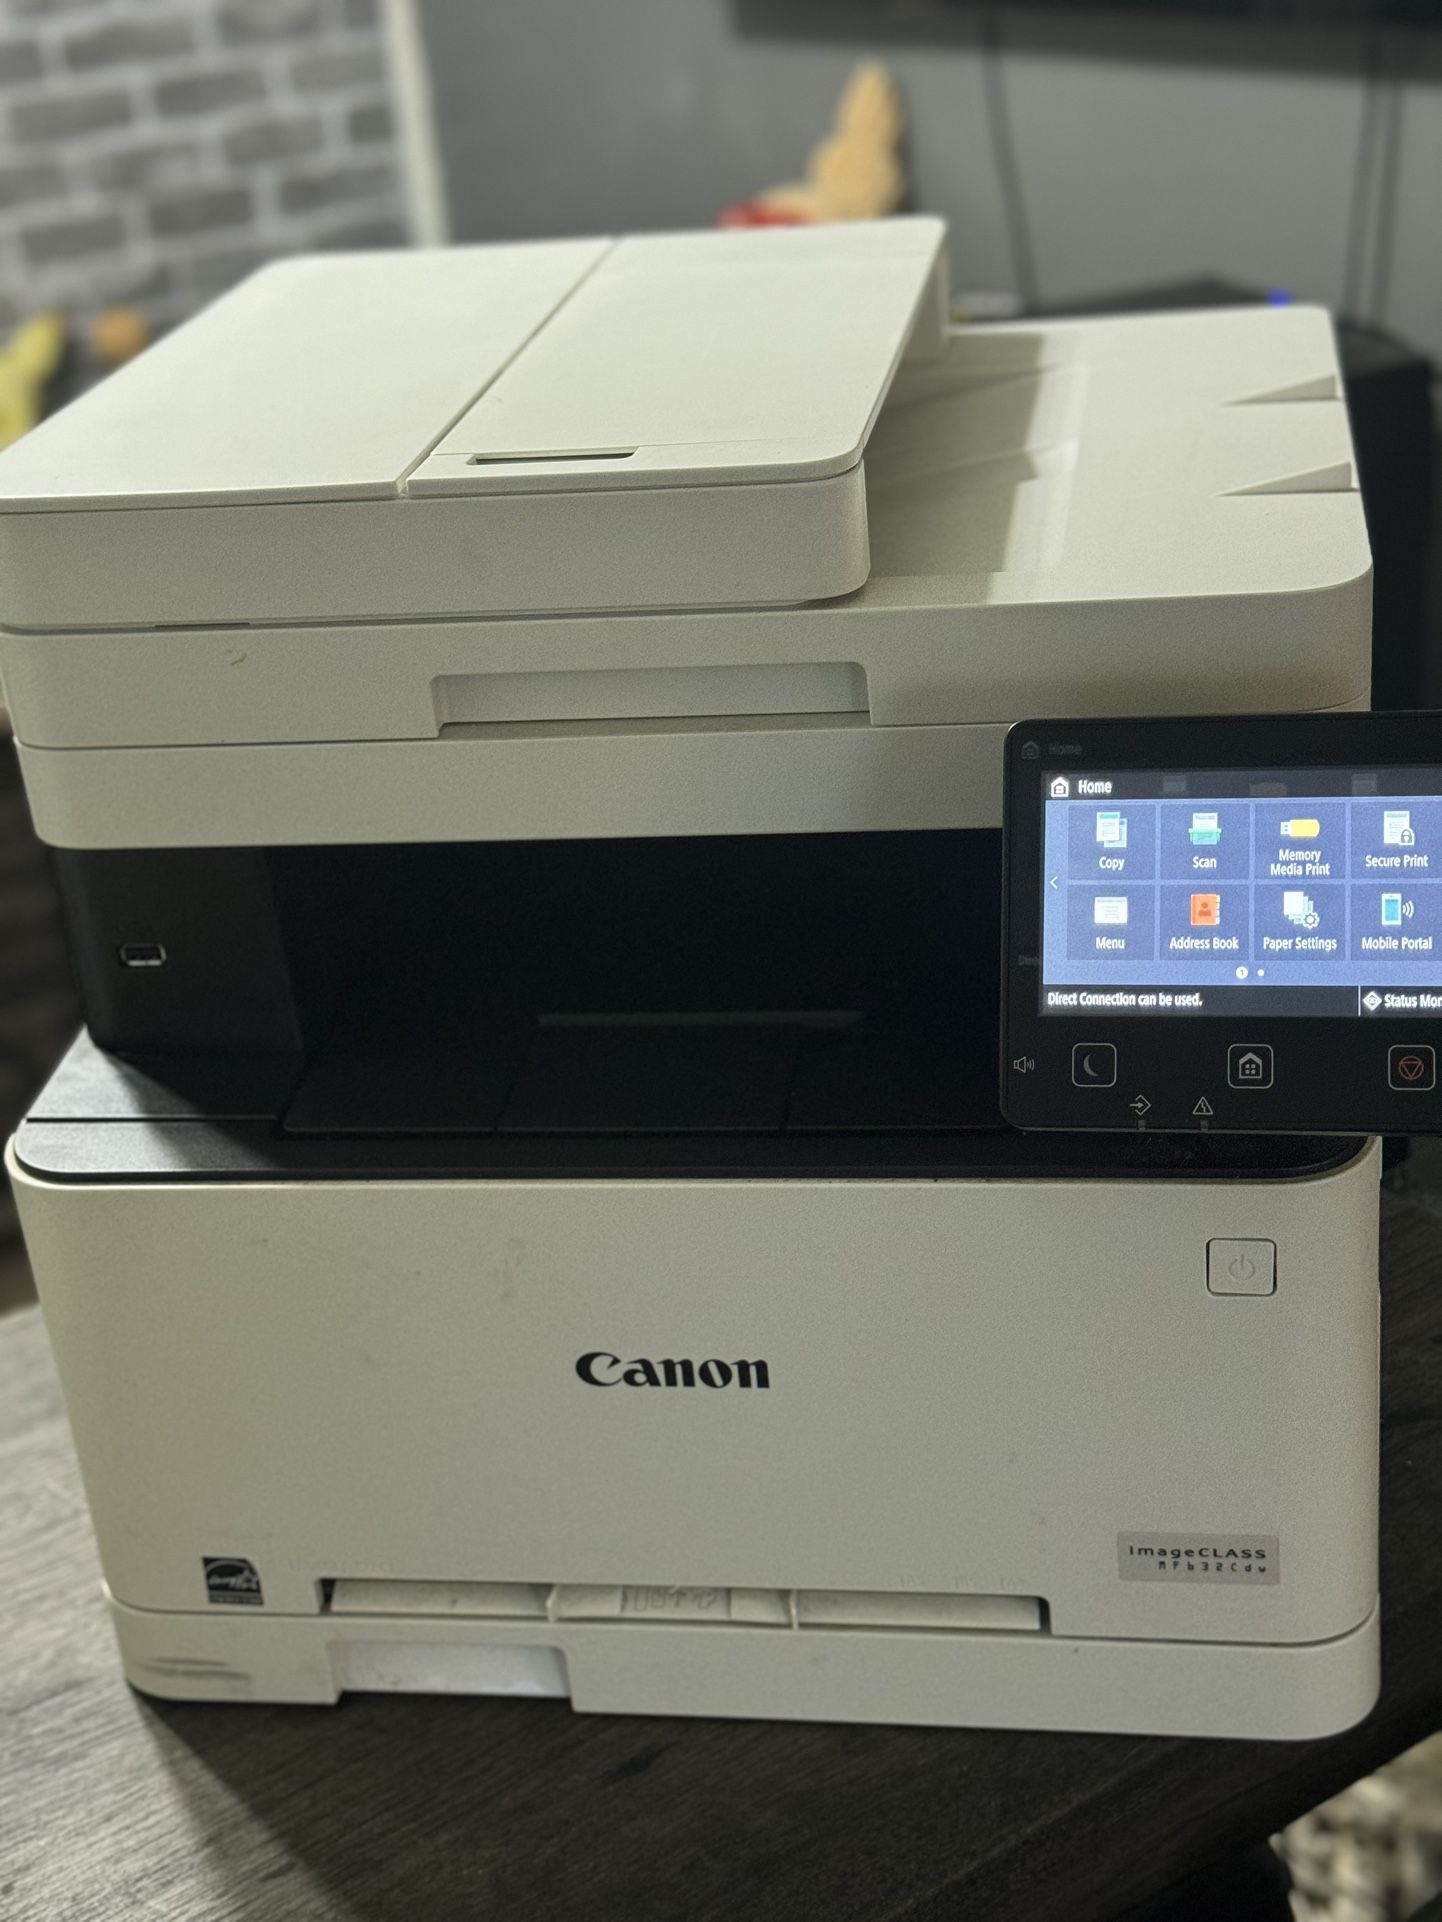 Canon ImageCLASS Printer